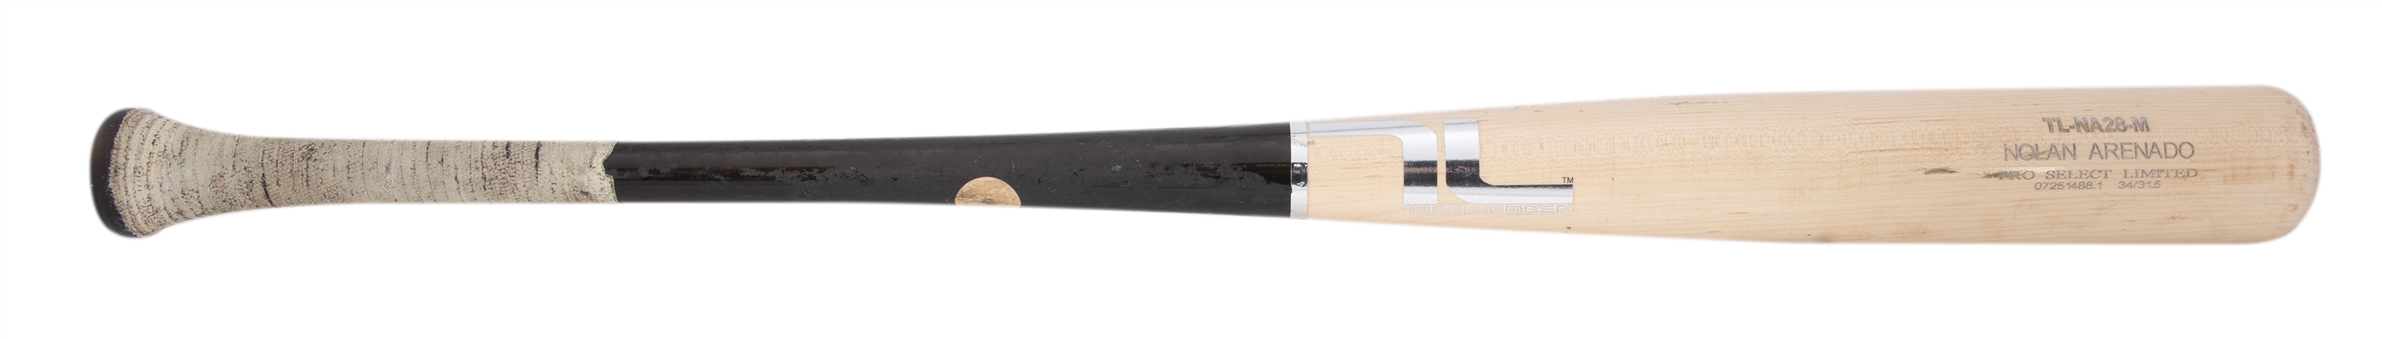 2014 Nolan Arenado Game Used Tucci Lumber TL-NA28-M Model Bat (PSA/DNA GU 8.5)